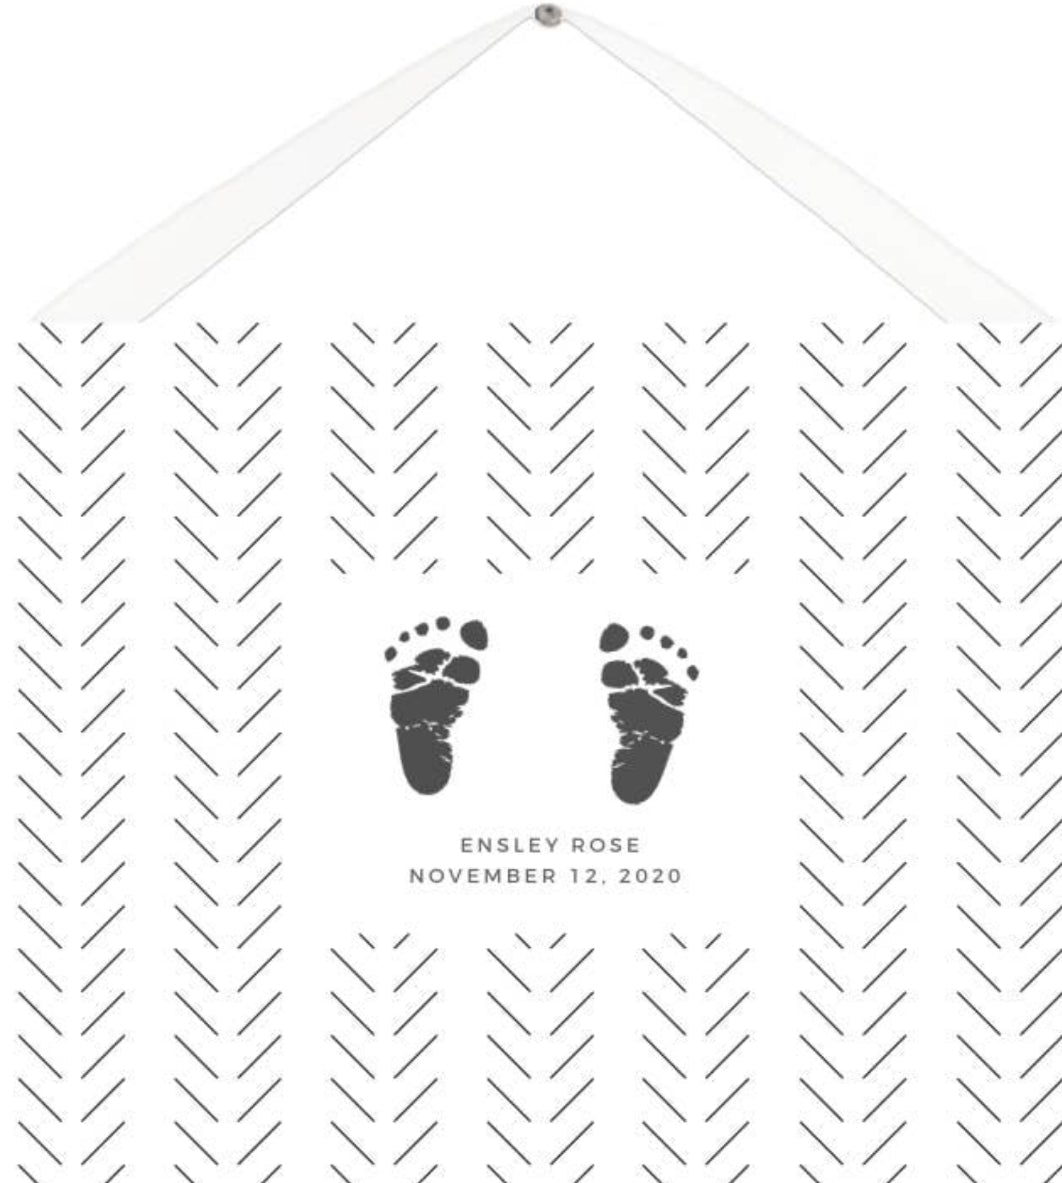 Baby Footprint Kit - Stamp my Feet